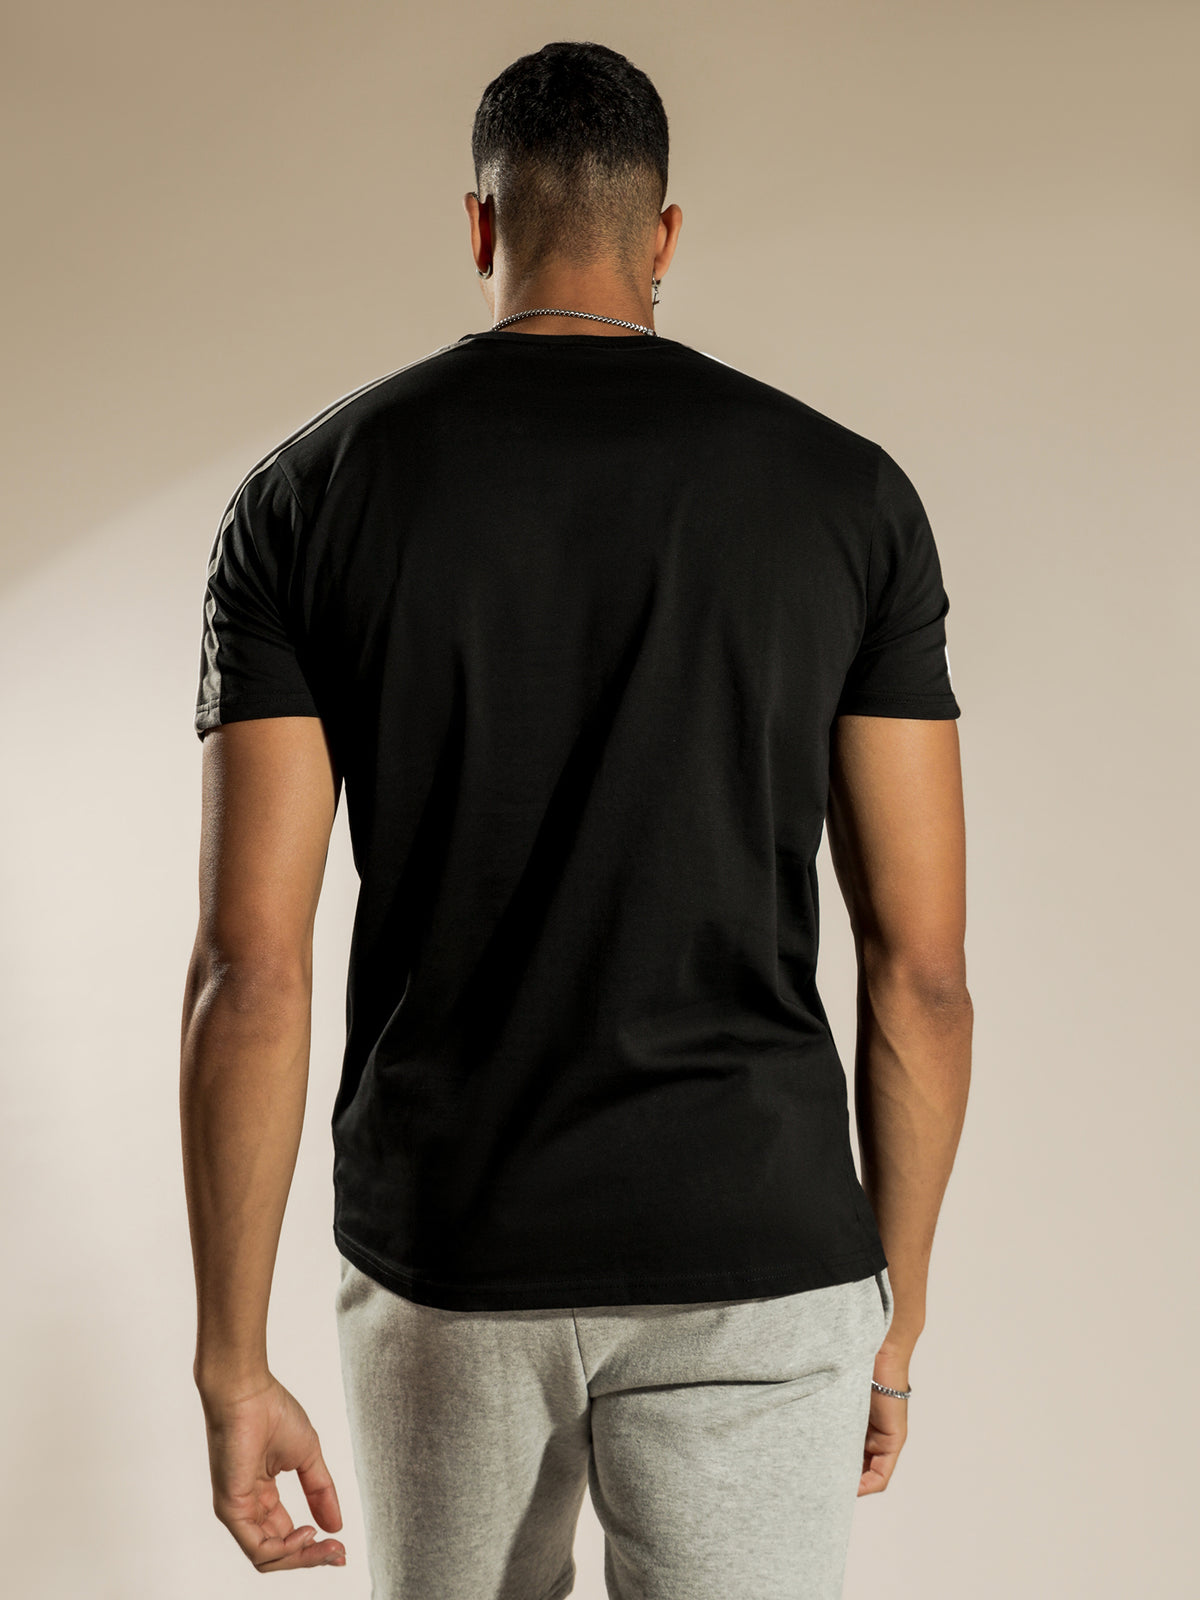 Carcano T-Shirt in Black &amp; Grey